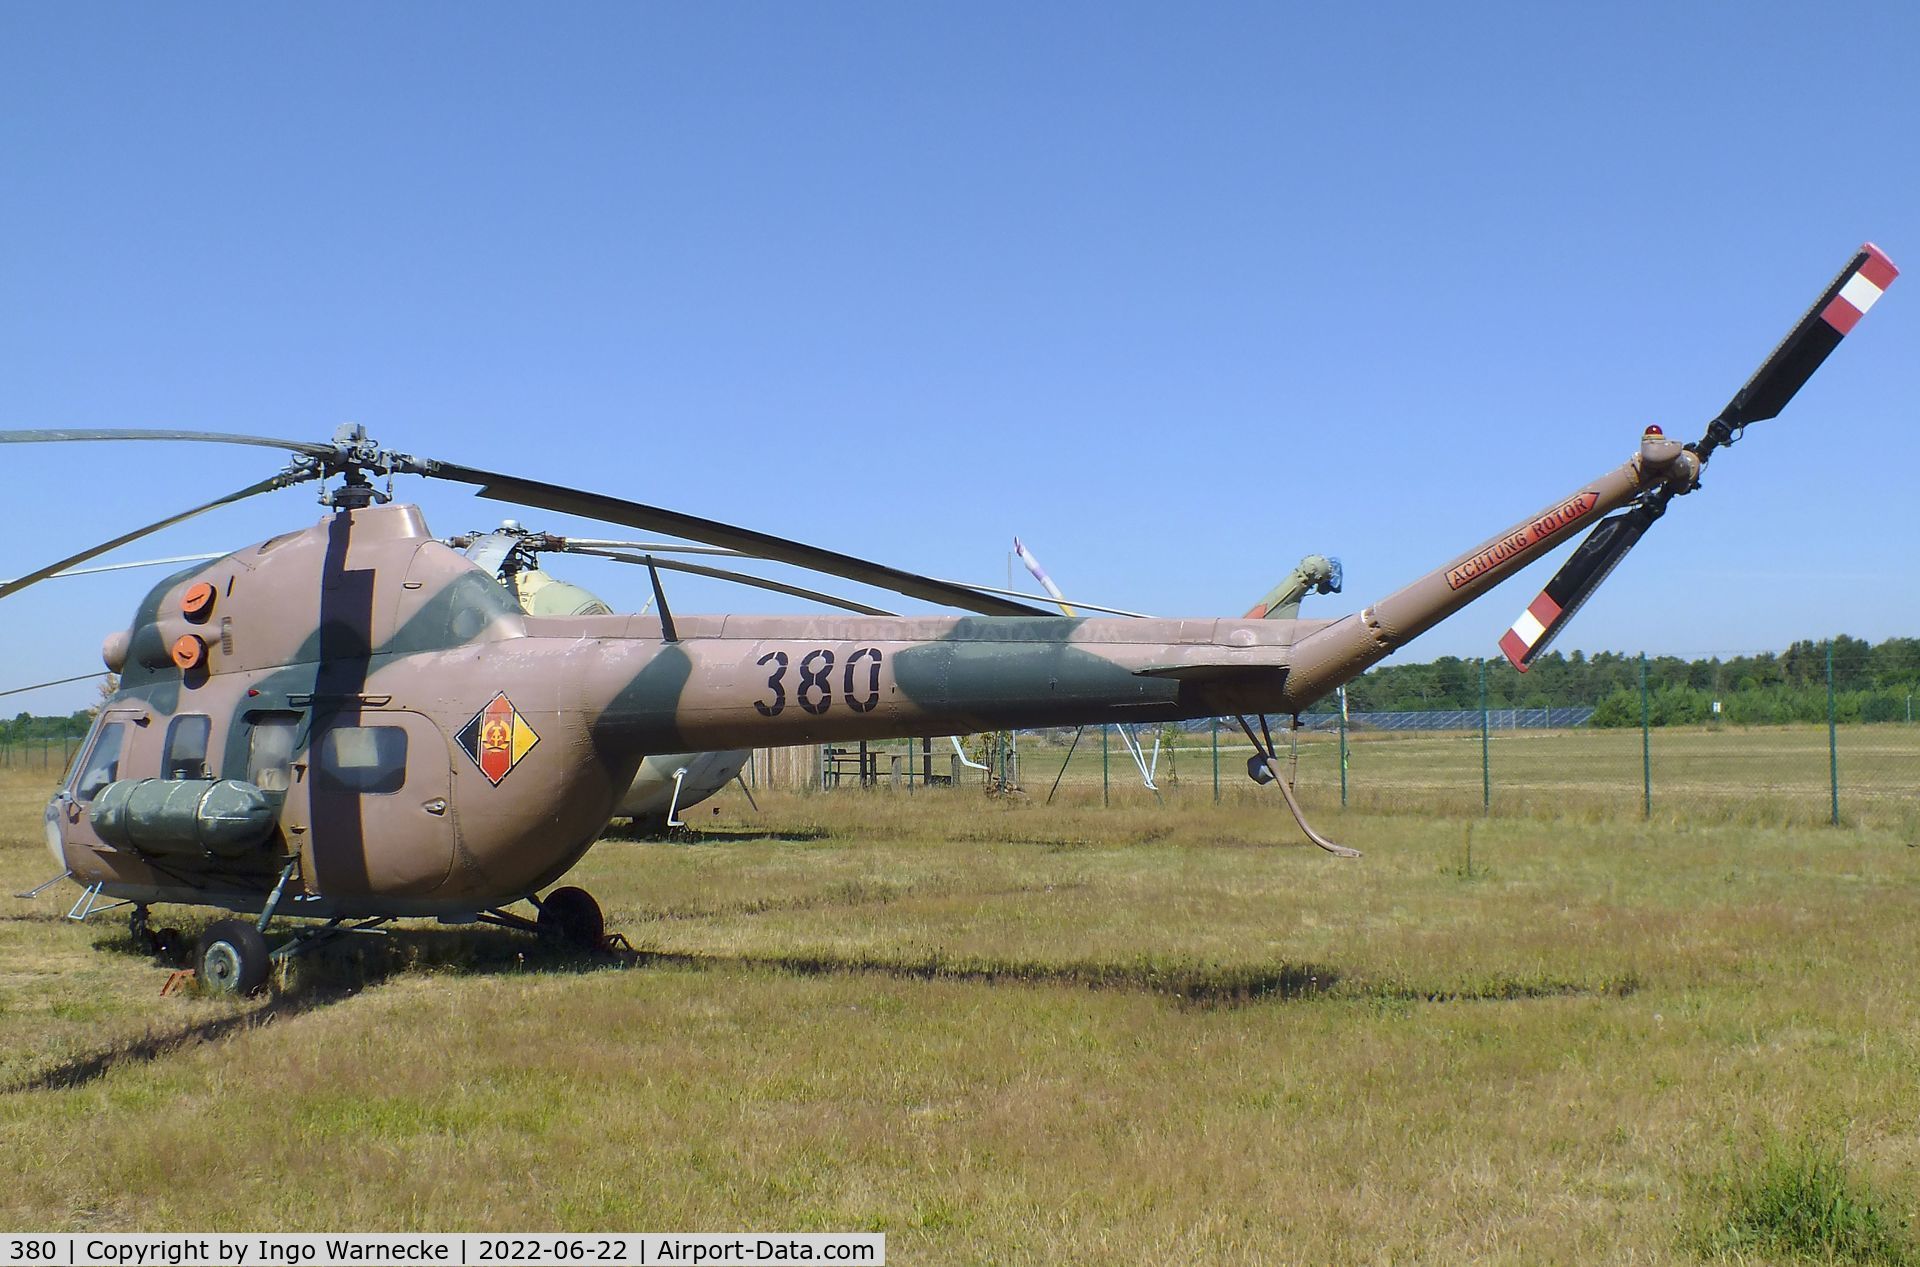 aircraft-380-1972-wsk-swidnik-mi-2-hoplite-c-n-562249032-photo-by